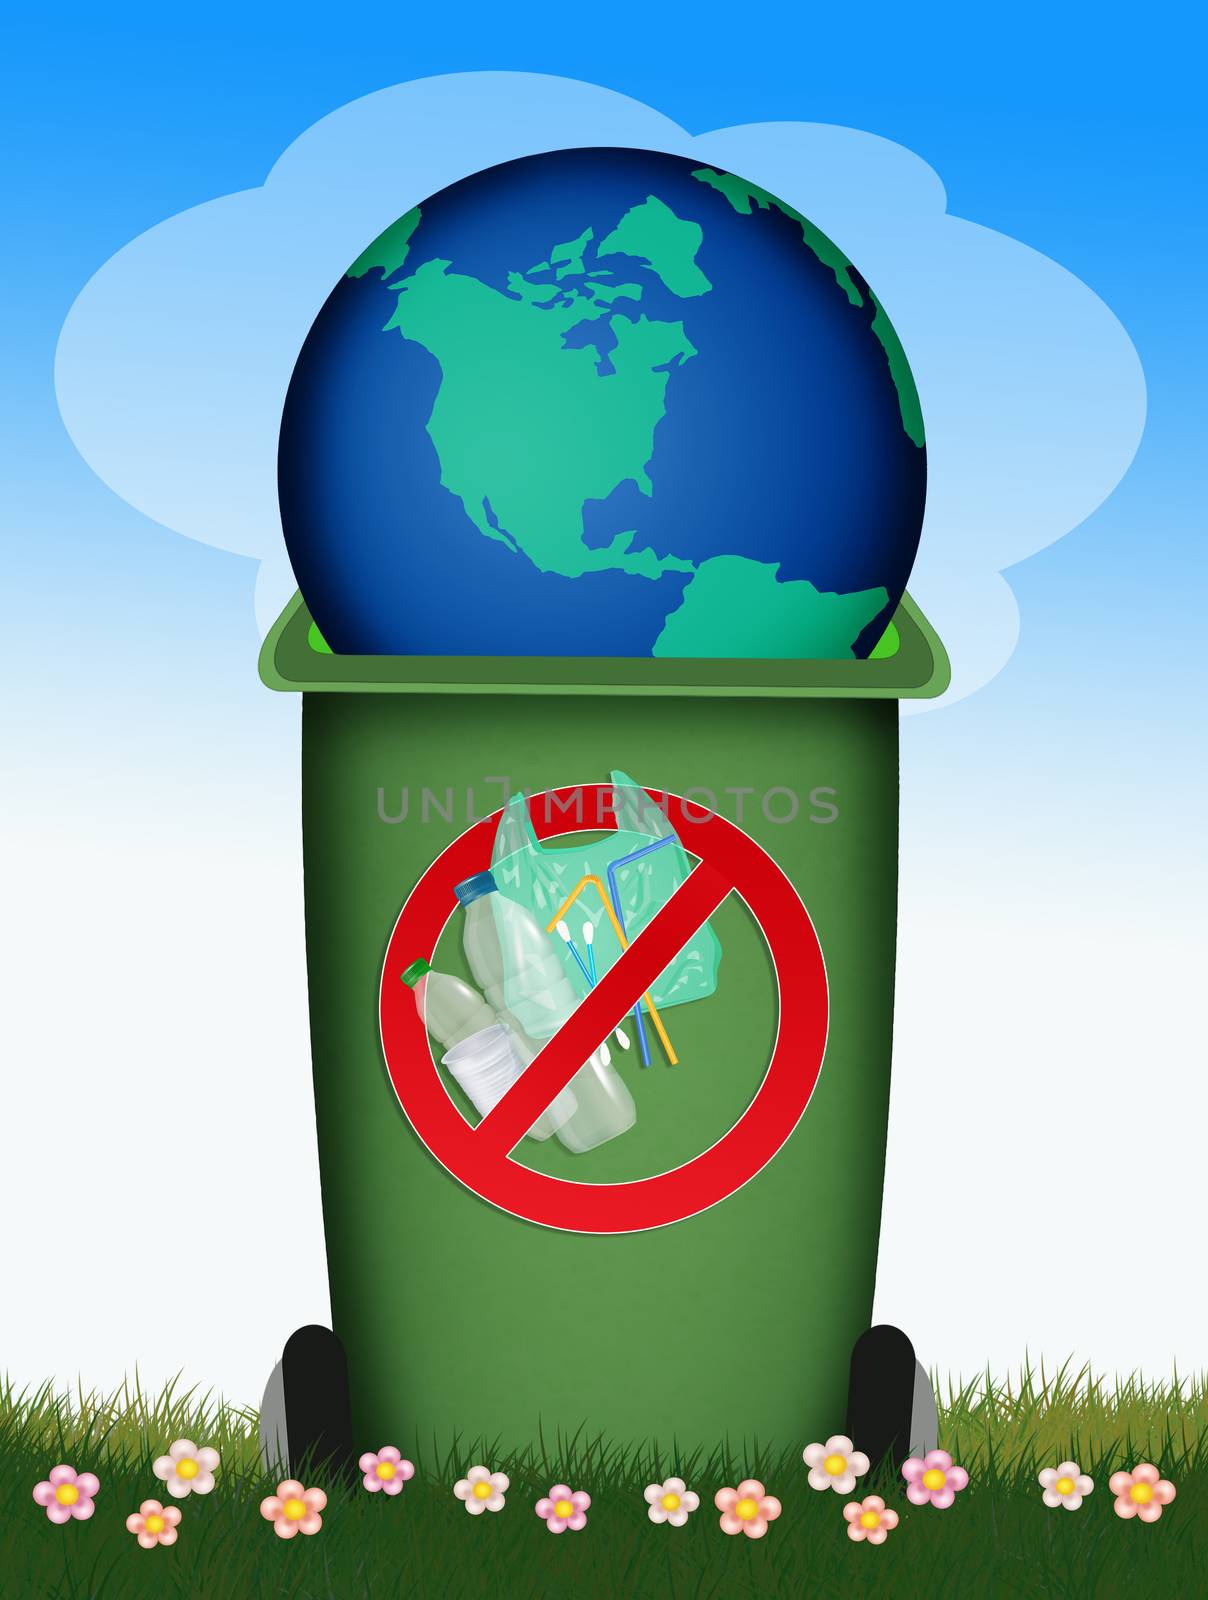 illustration of plastic pollution